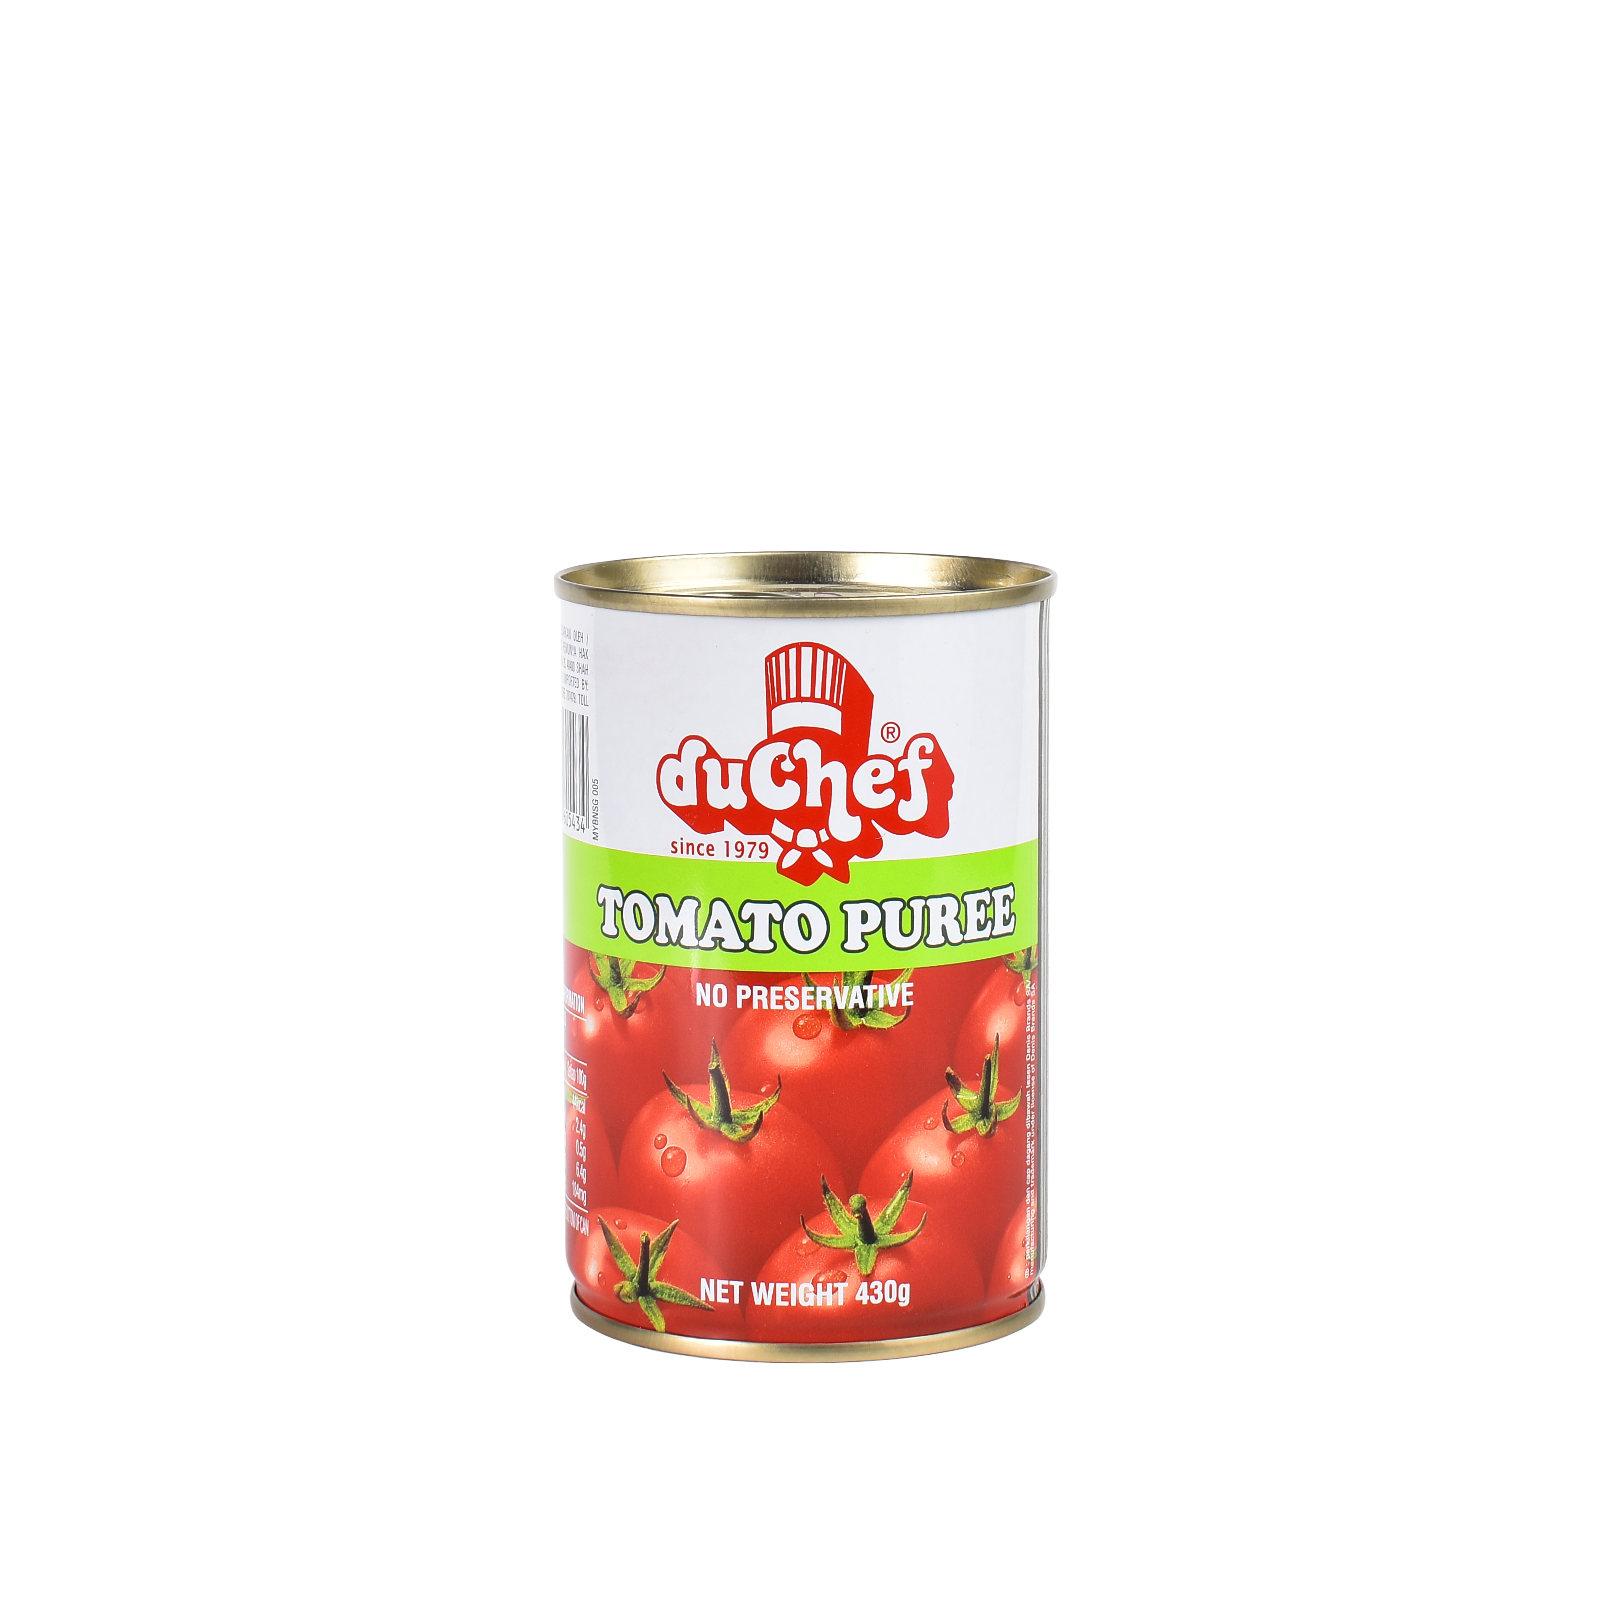 DuChef Tomato Puree 430g.png